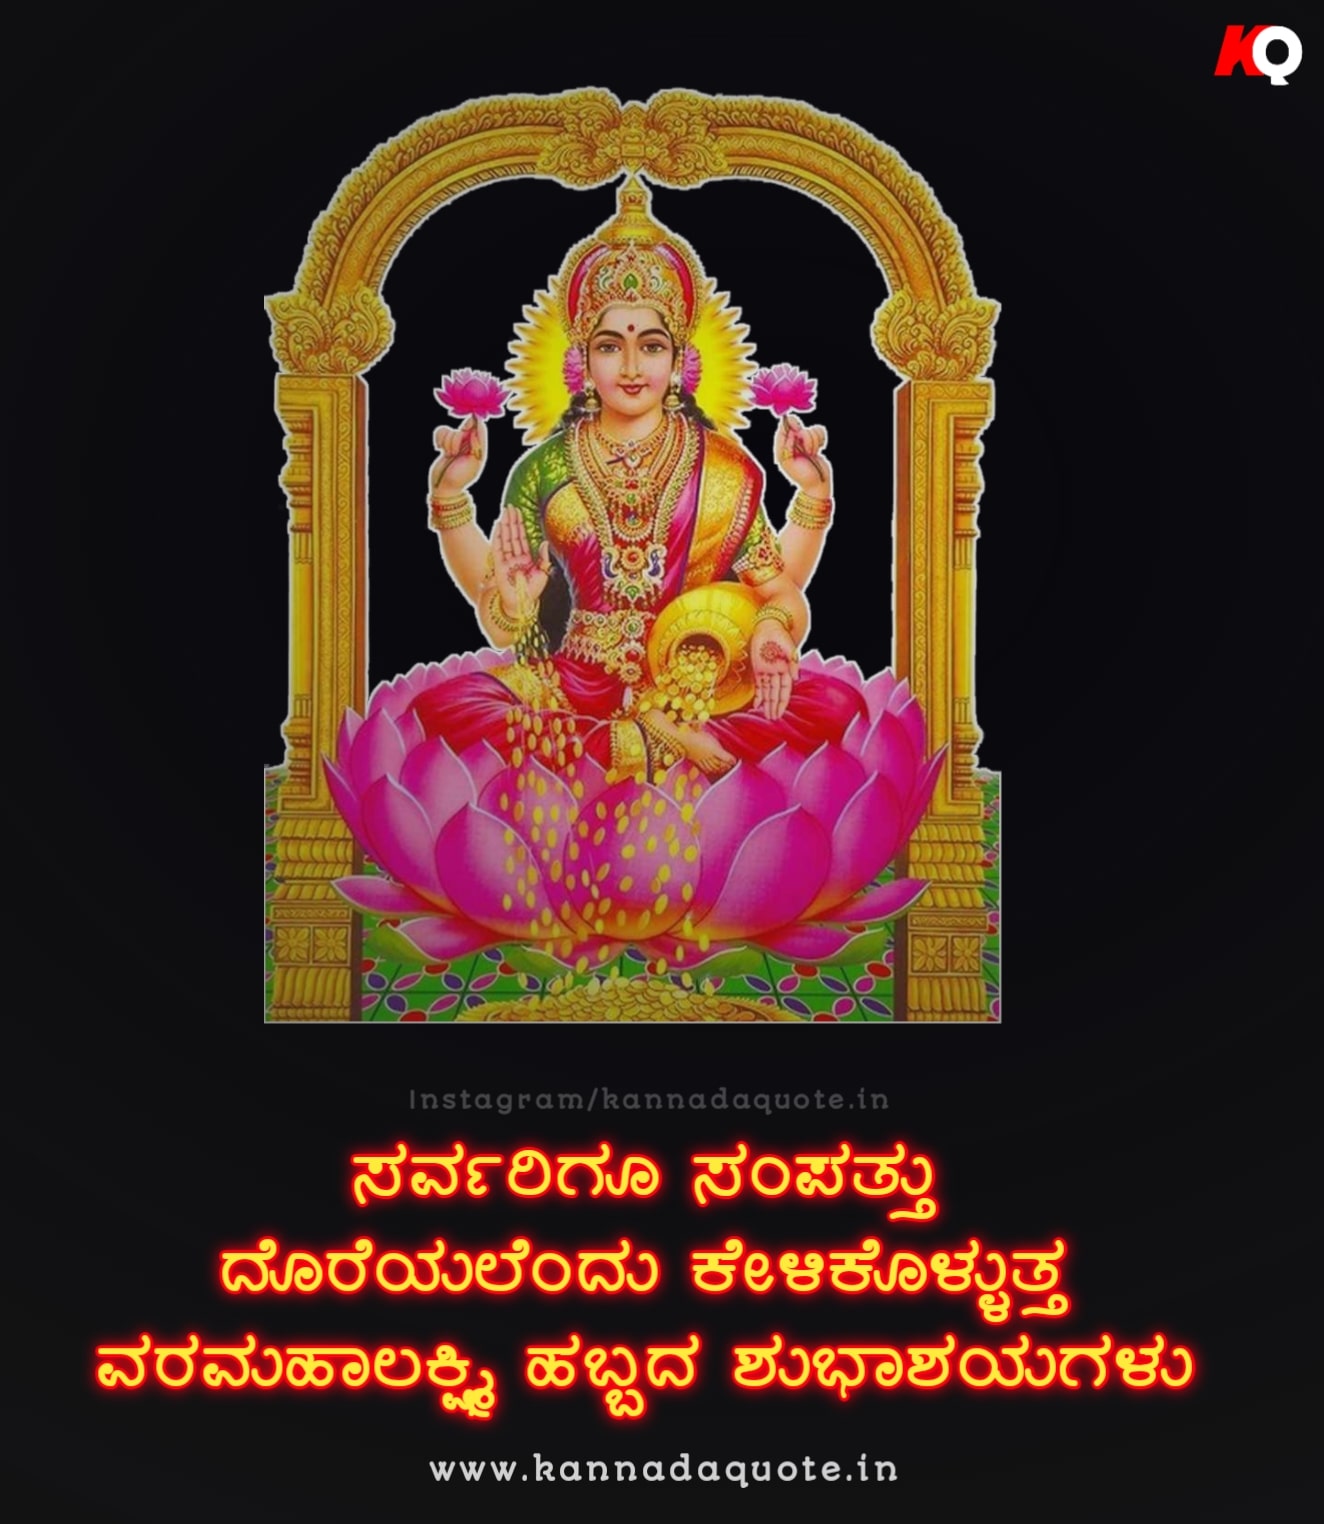 Shubhashayagalu varamahalakshmi wishes in kannada